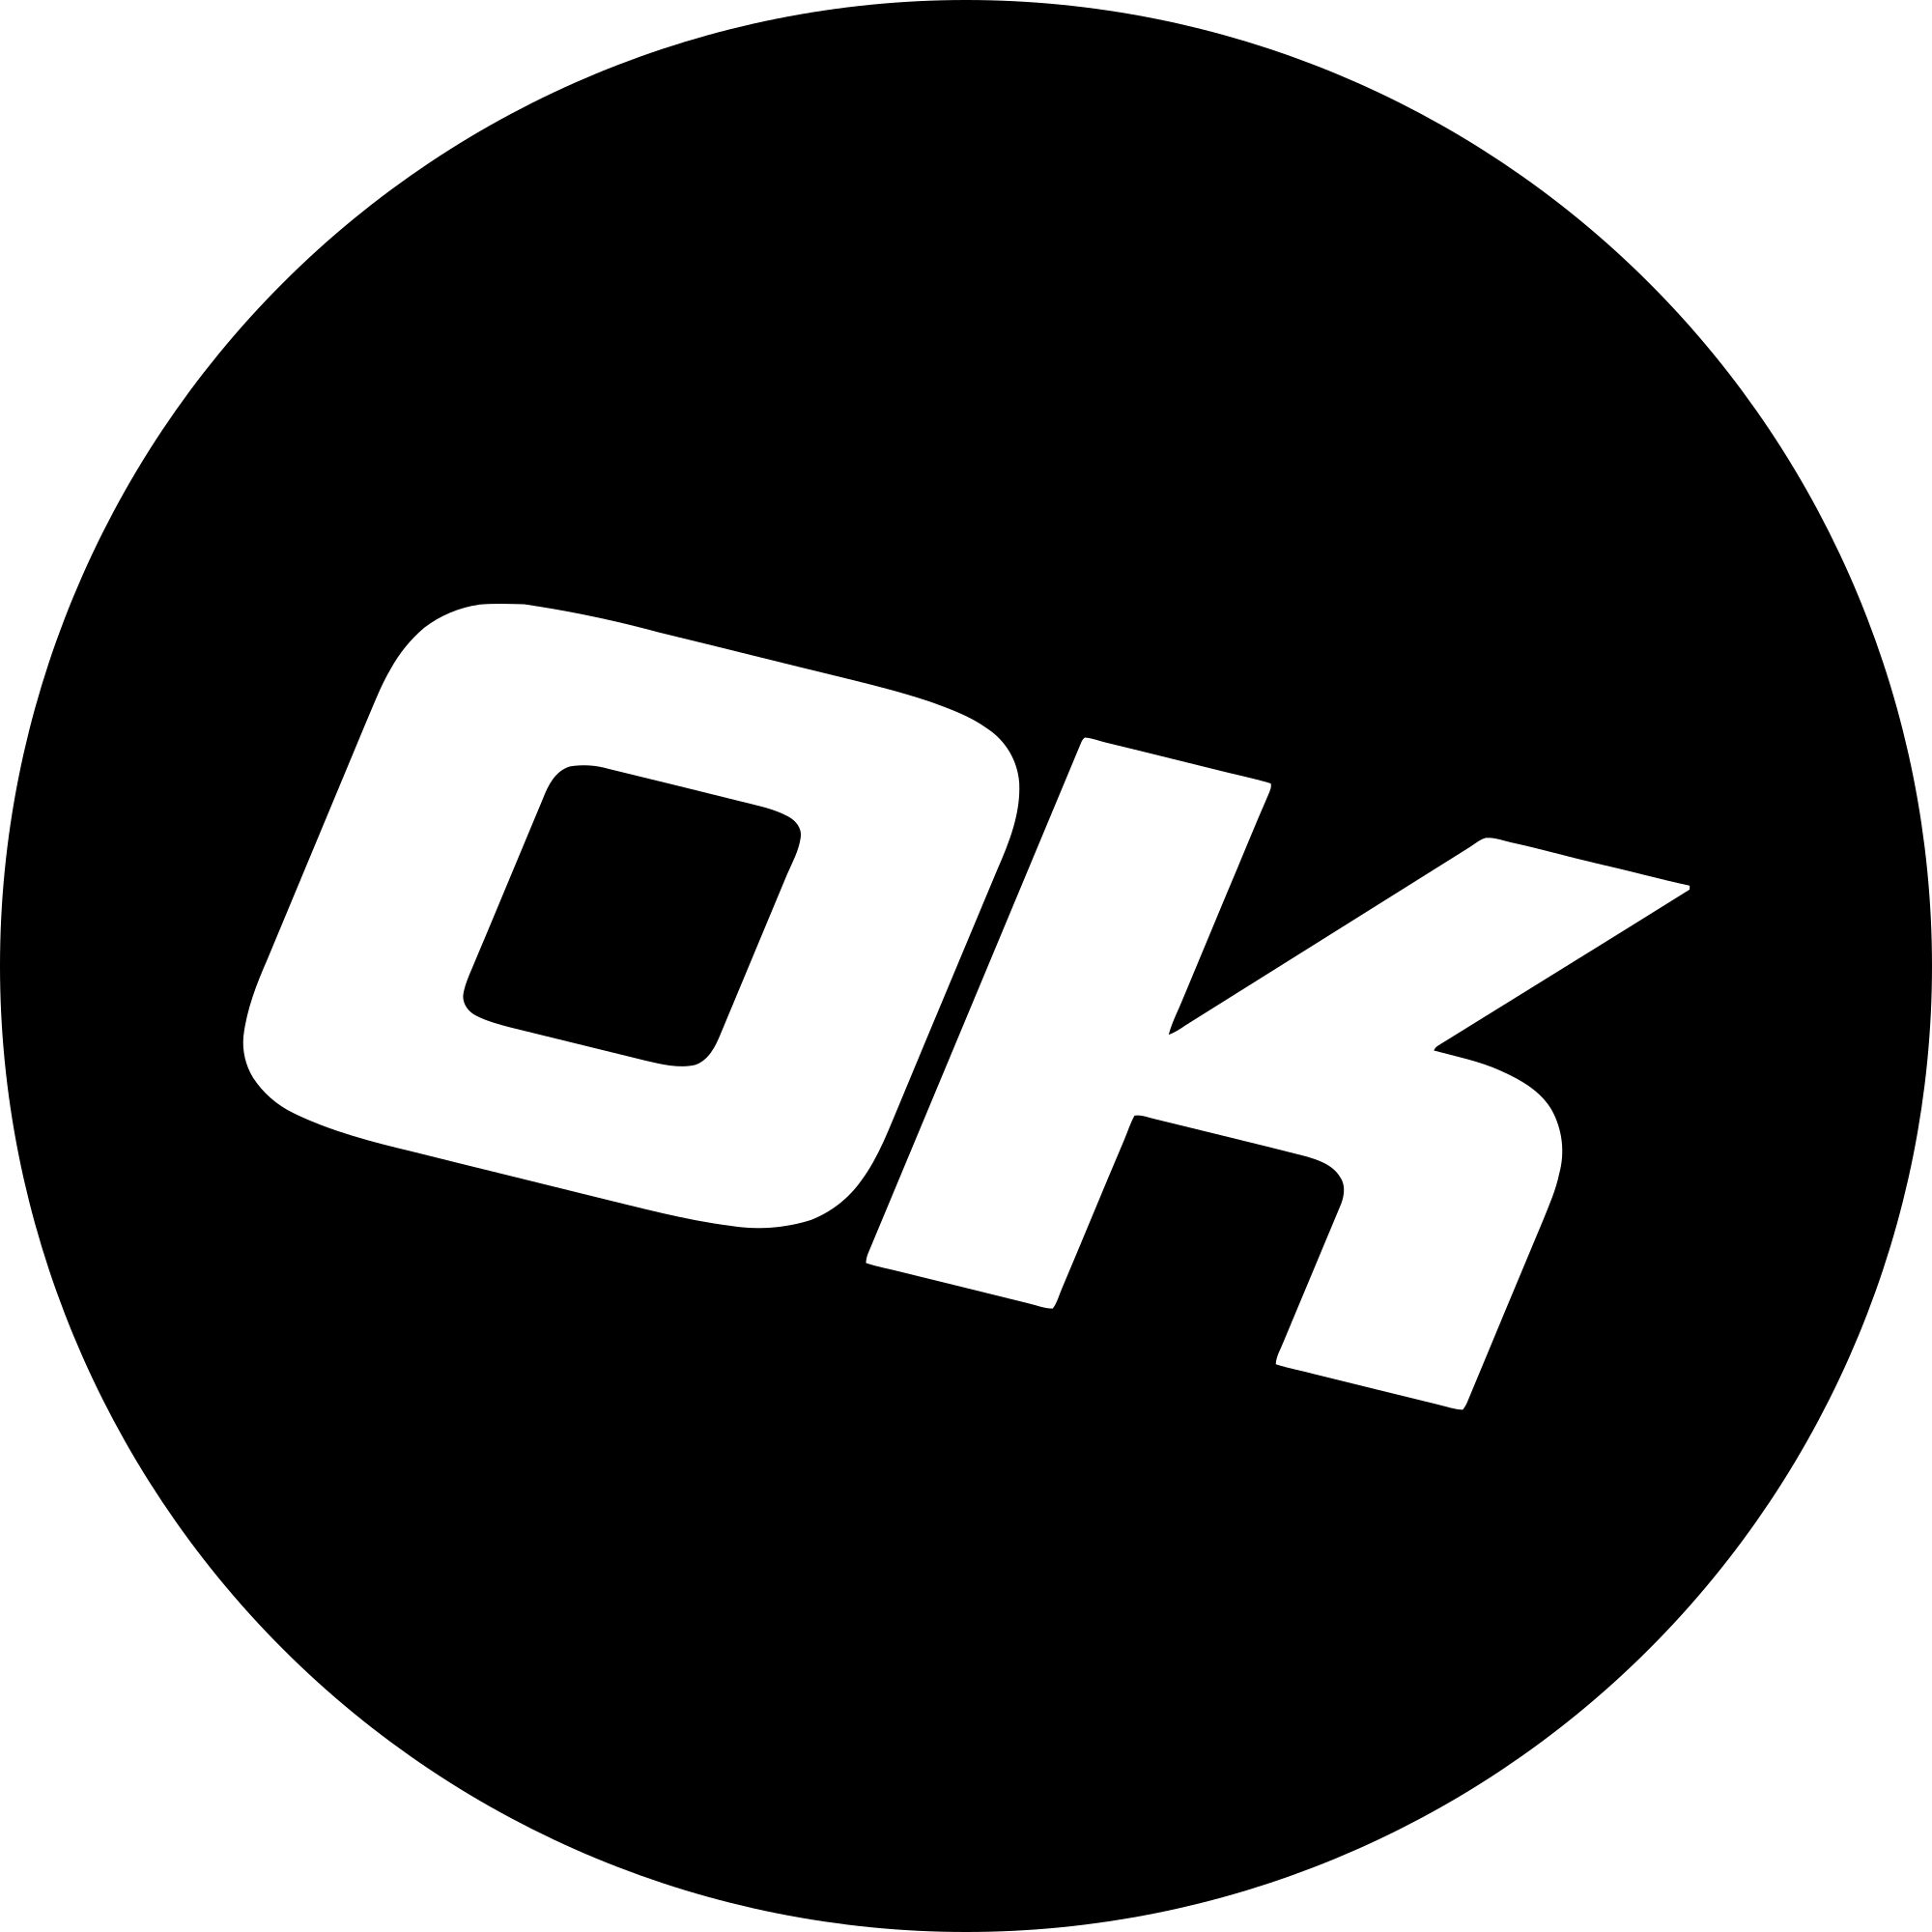 134 Ok Logo向量圖形和EPS 檔案- Getty Images